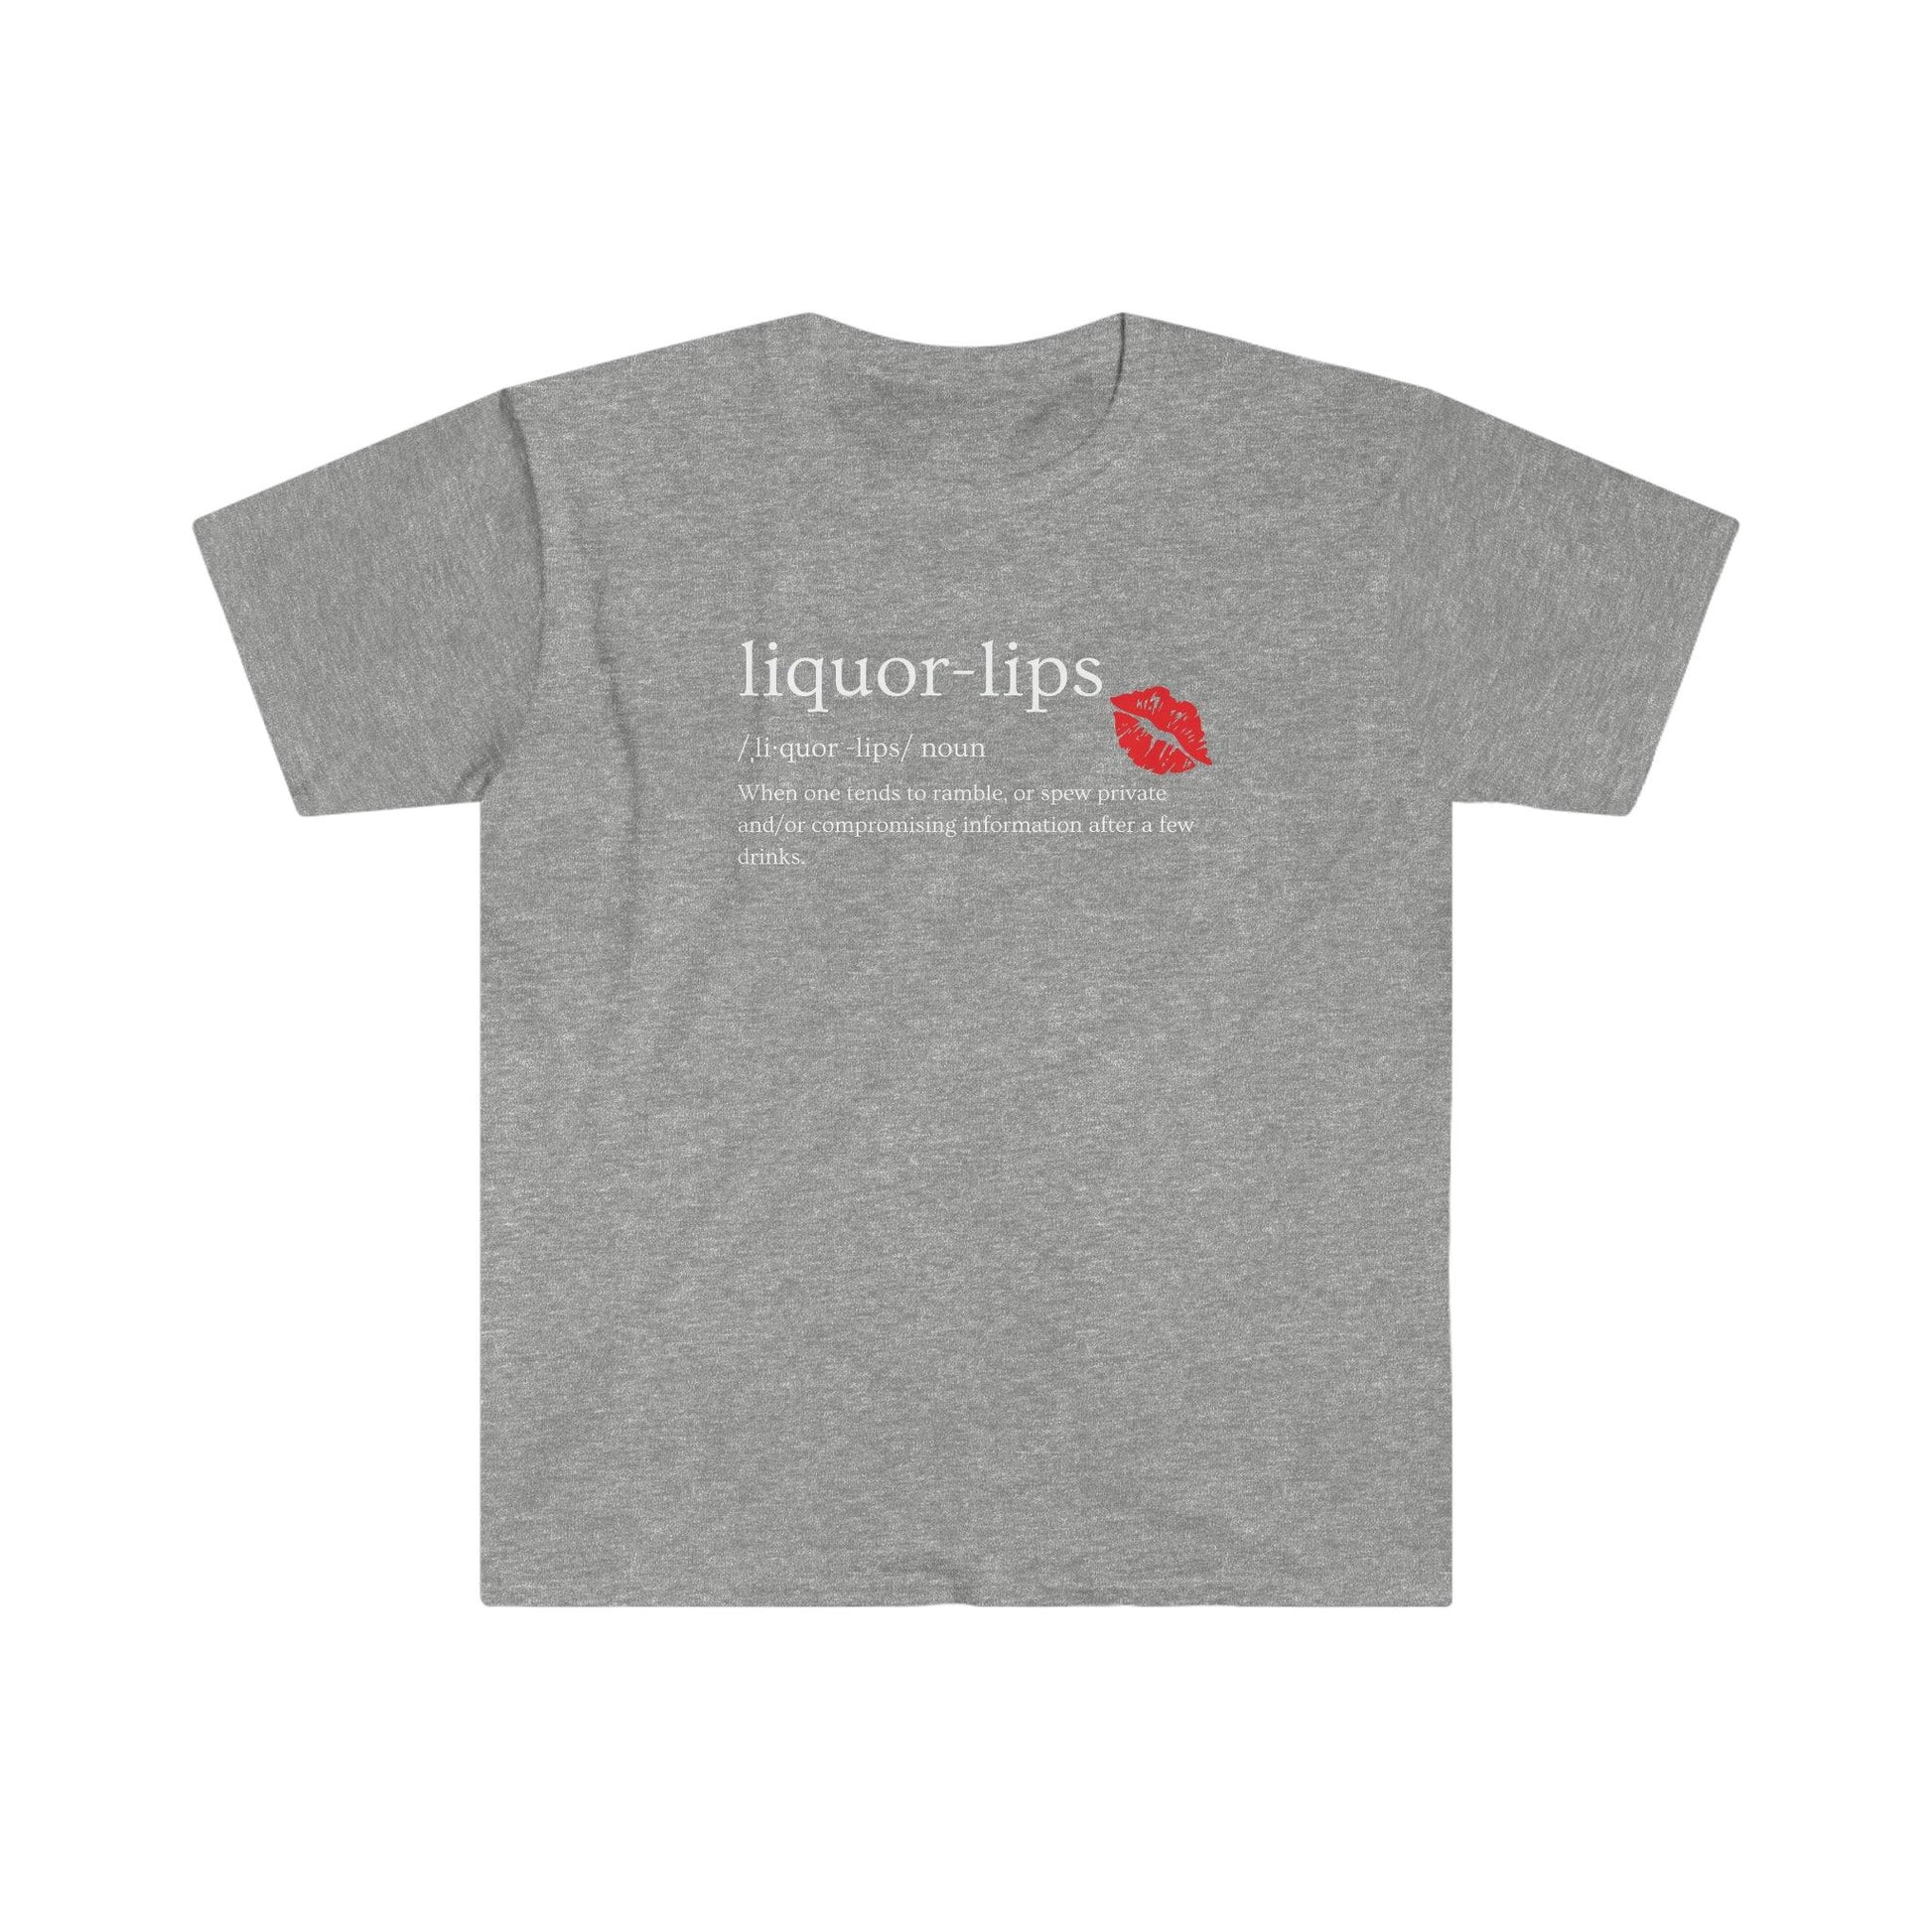 Liquor Lips definition Unisex Soft style T-Shirt, Bachelorette Party Shirt - Lickerlips Lip Balms